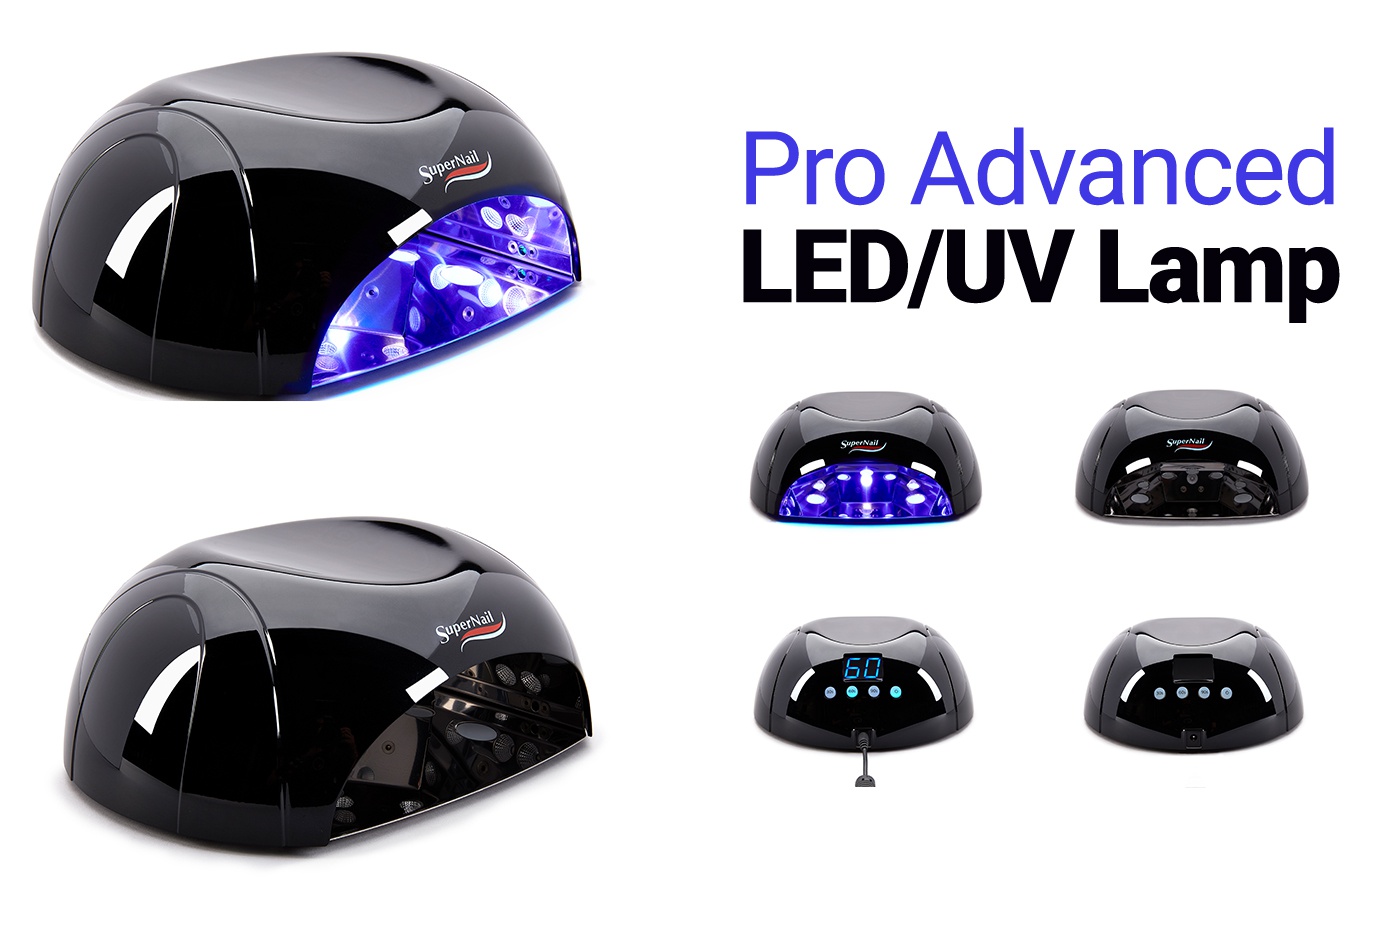 Pro Advanced LED/UV Lamp